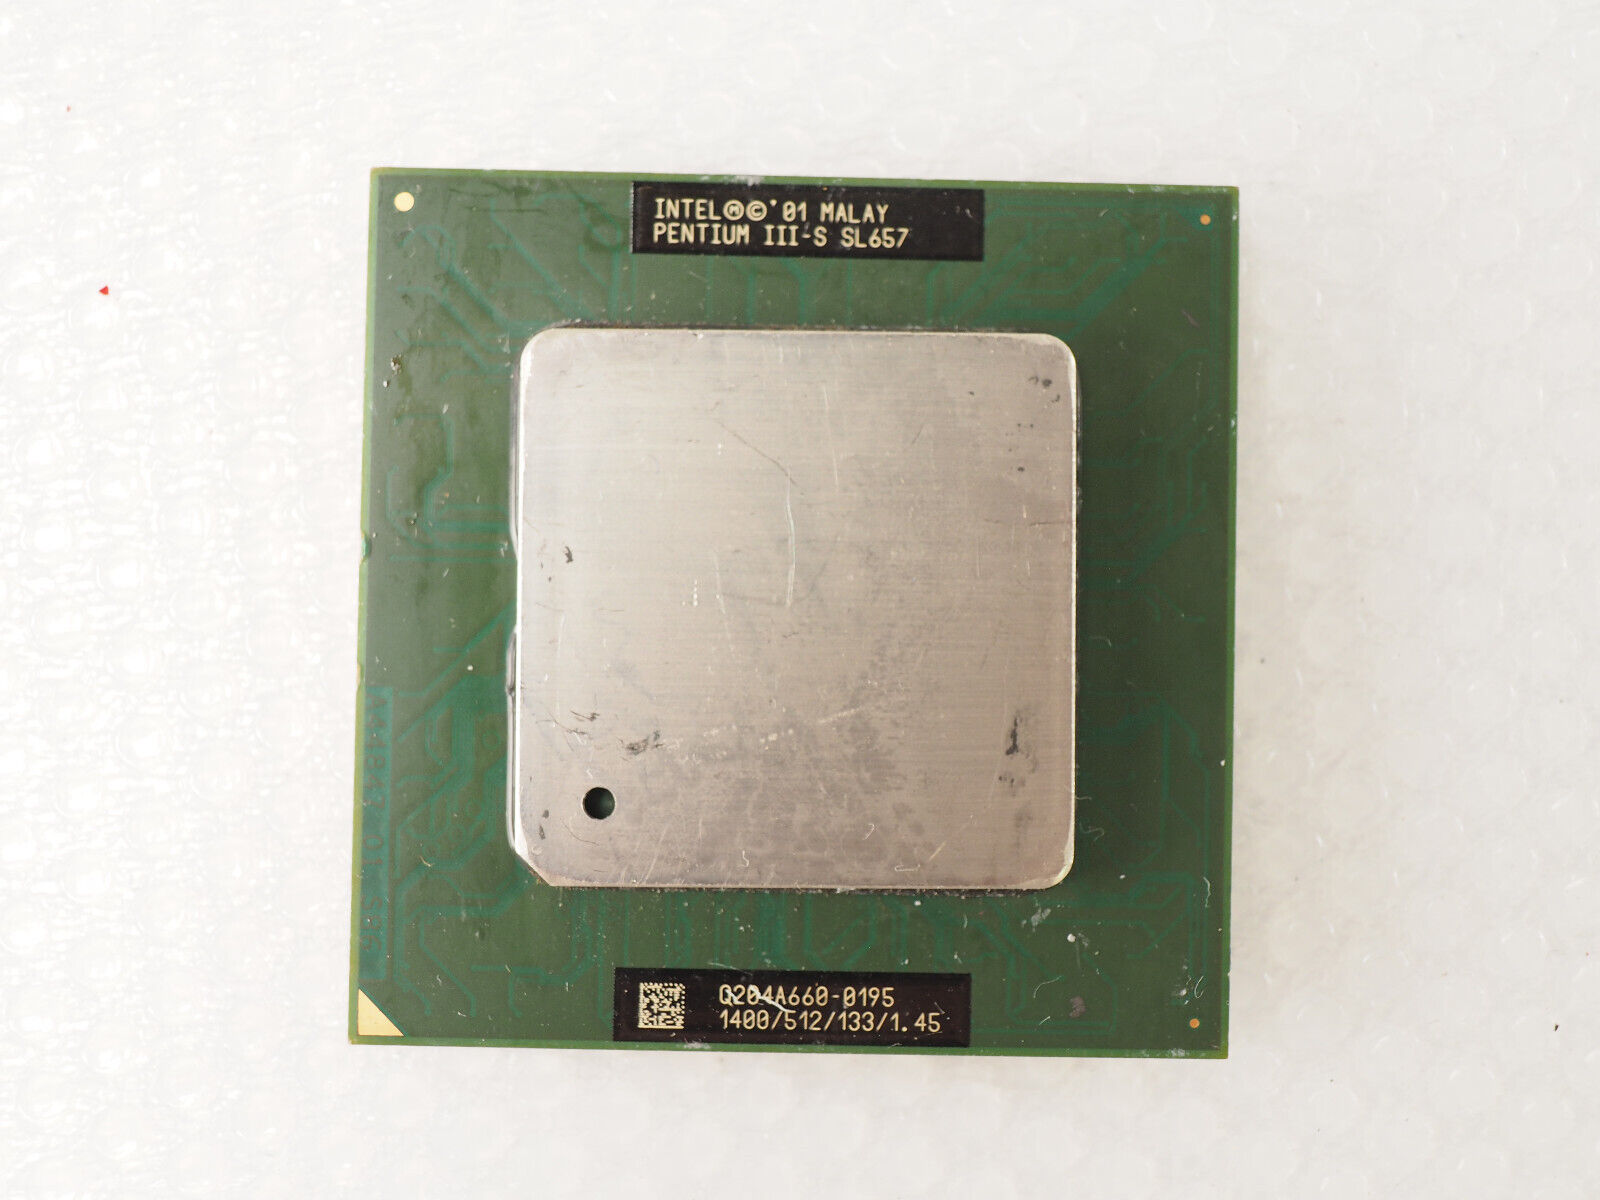 INTEL PENTIUM III-S 1400 /512 /133 /1.45 SL657 Desktop Processor CPU